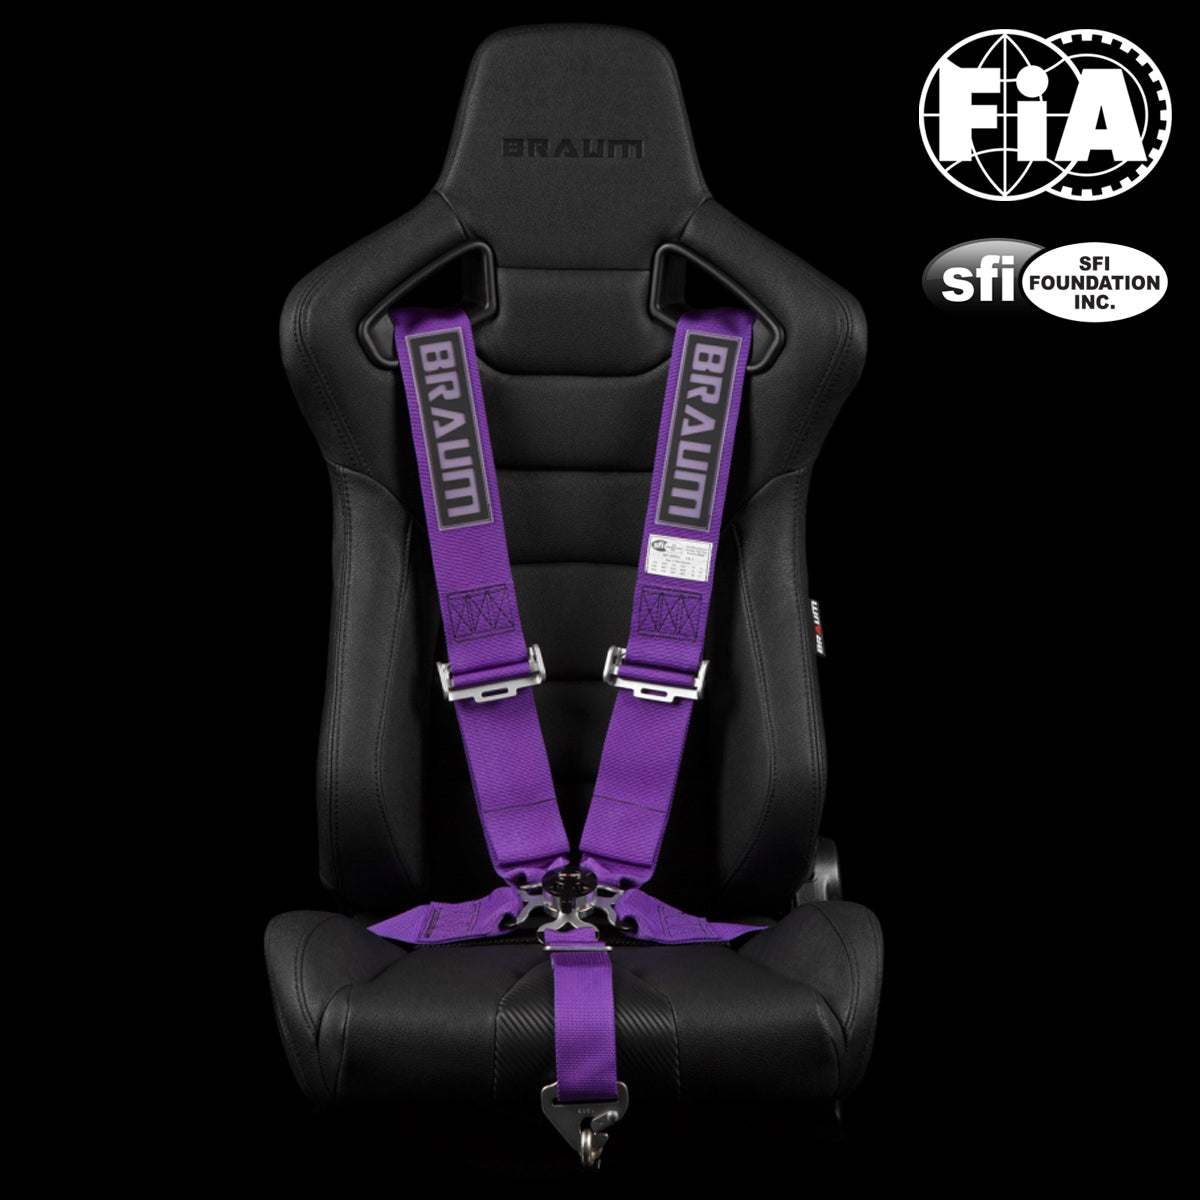 5PT - SFI 16.1 Certified Racing Harness 3" Strap